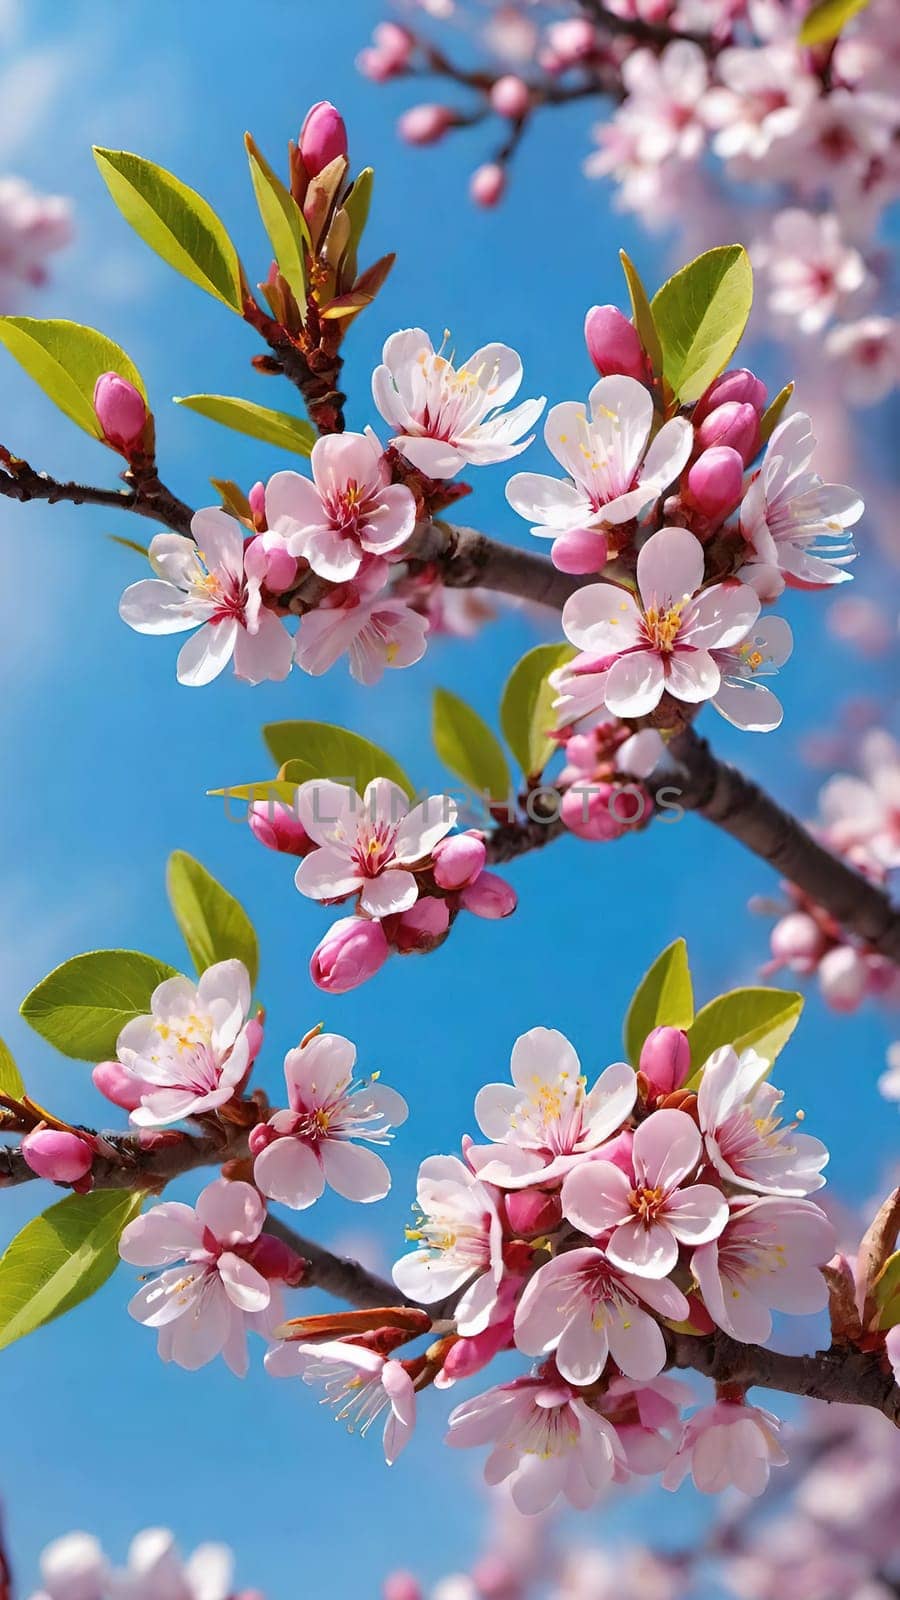 Cherry blossom in spring, pink flowers on blue sky background. by yilmazsavaskandag